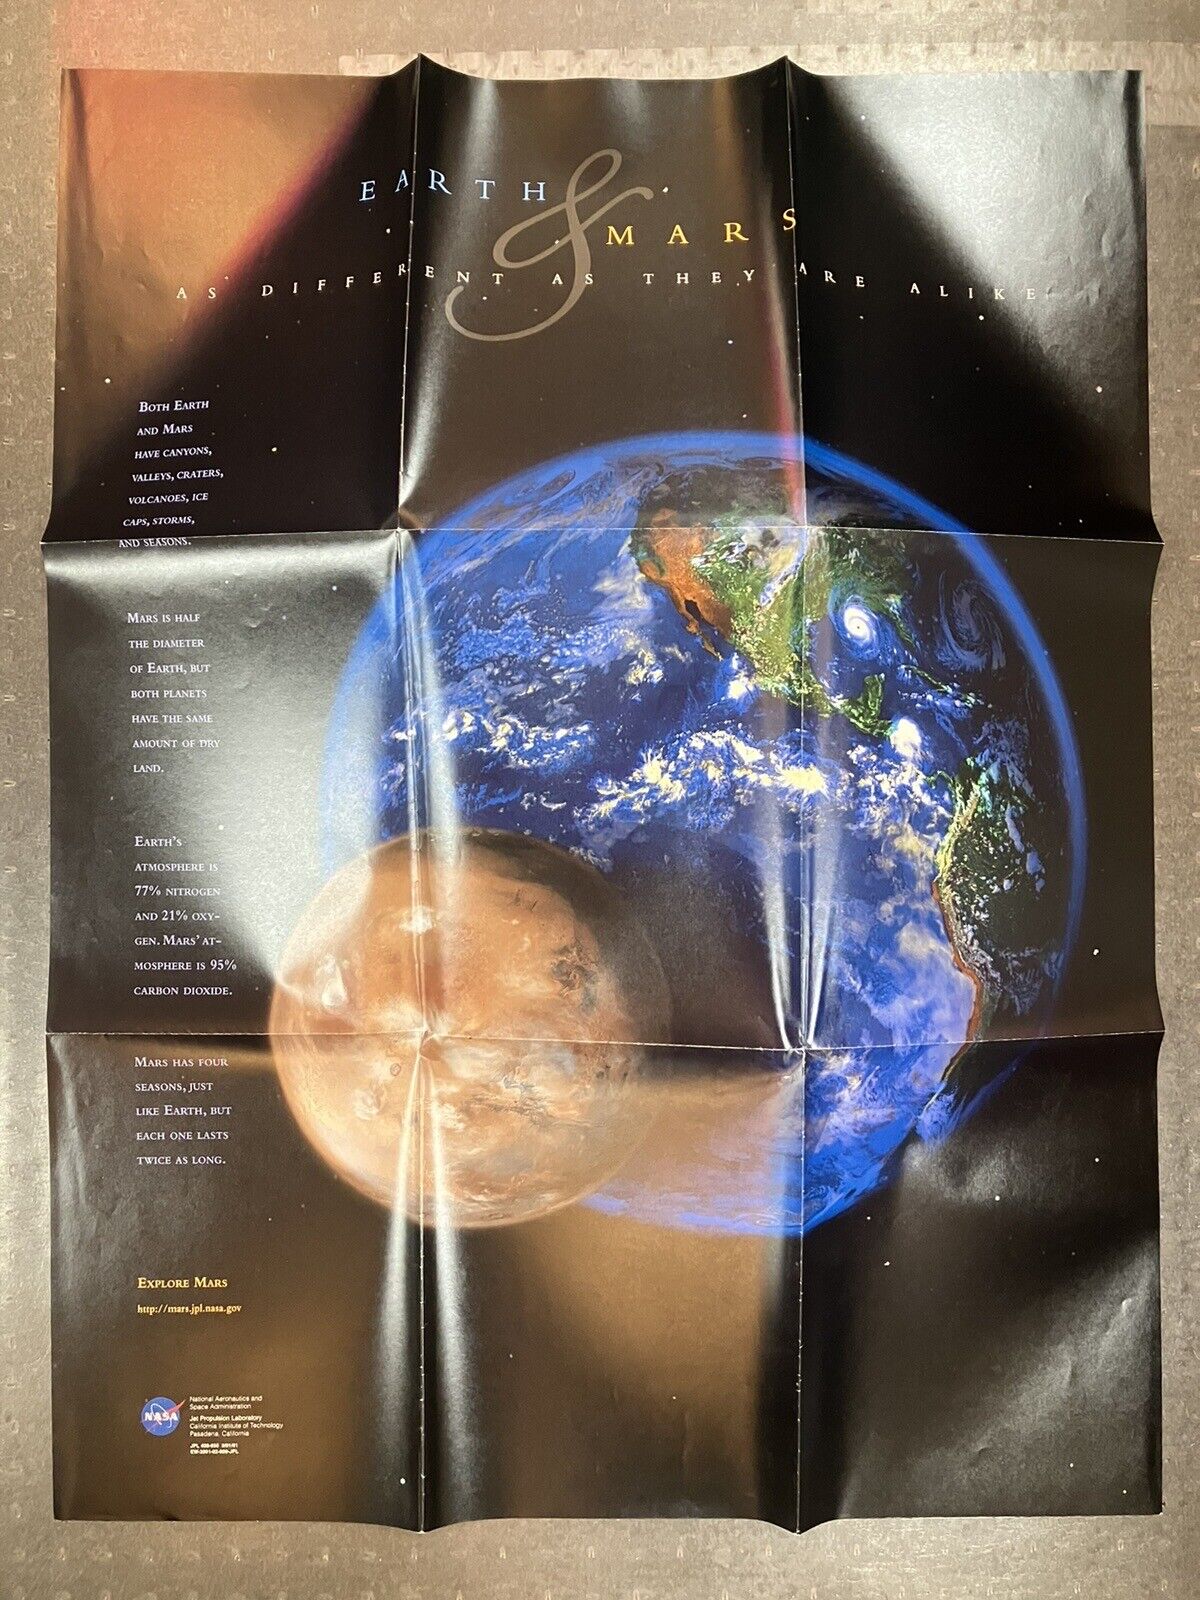 NASA Earth And Mars Explore Mars 32.5x25 Inch Poster